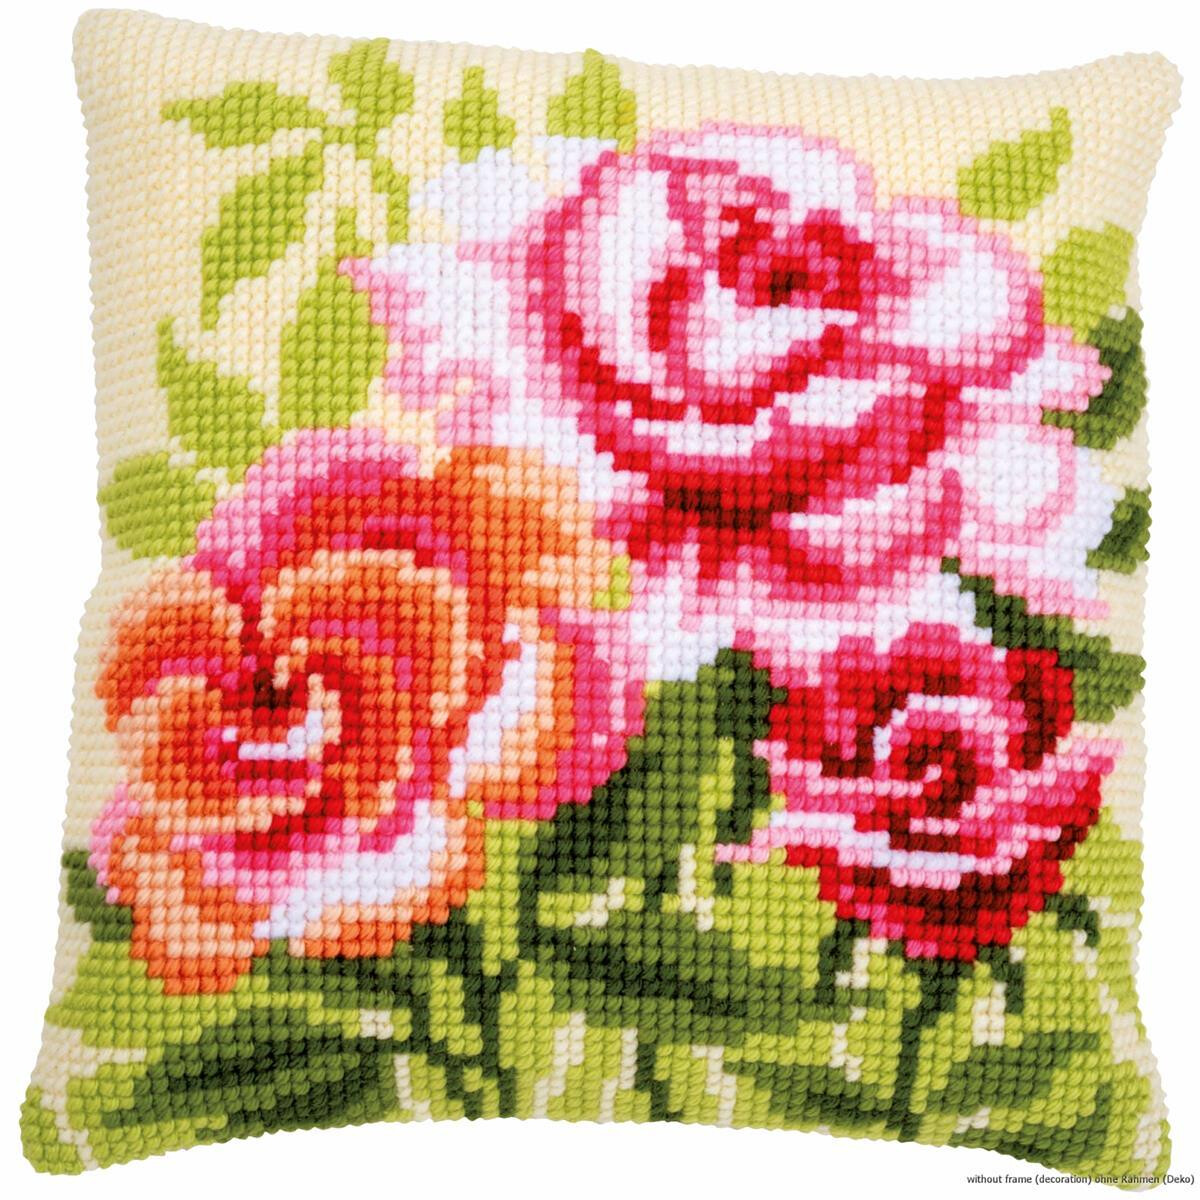 Vervaco cross stitch kit cushion "Roses at...